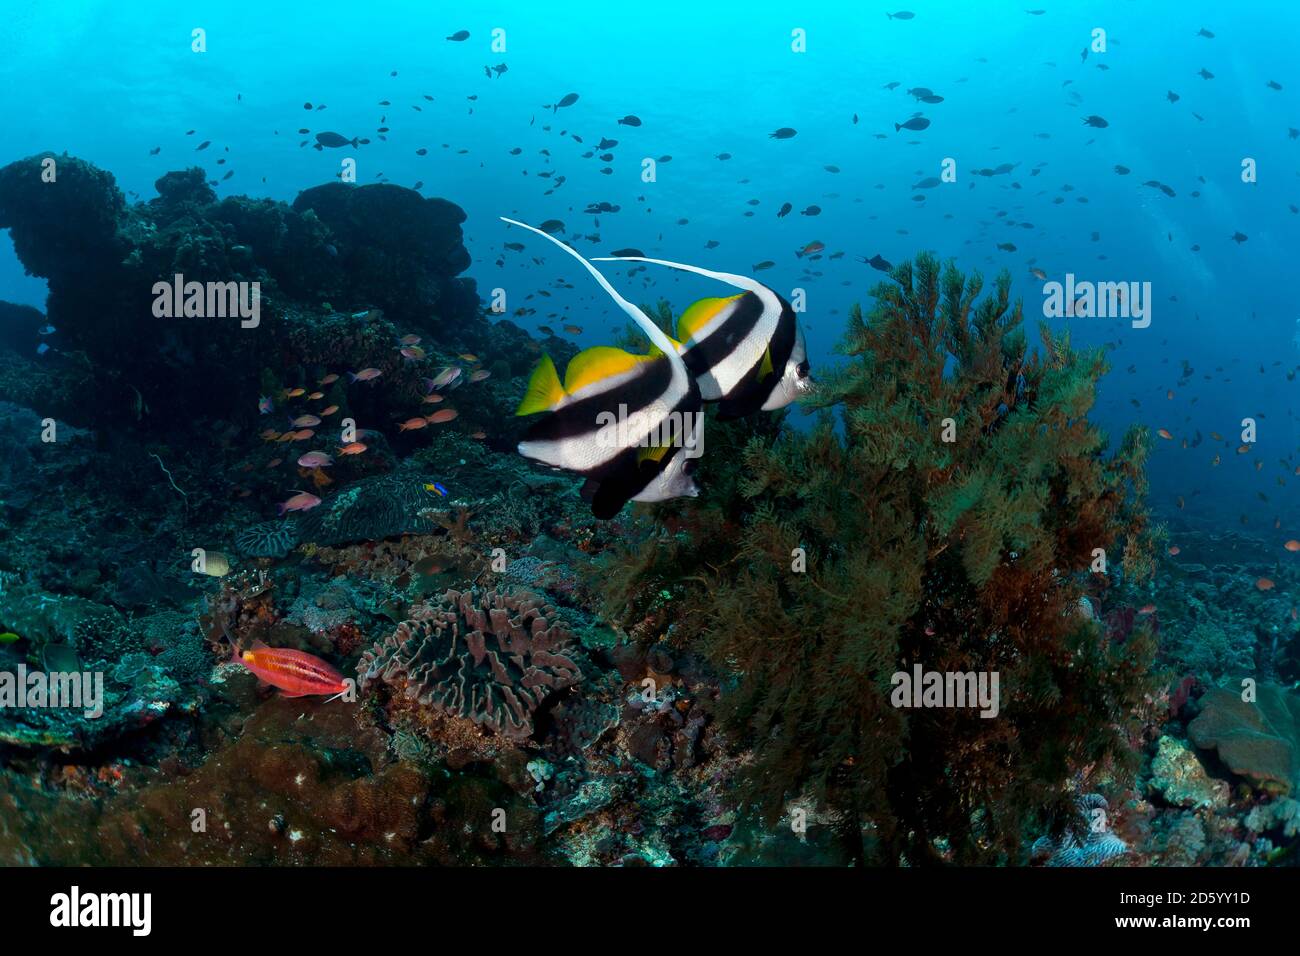 Indonesia, Bali, Nusa Lembongan, Long-finned bannerfish, Heniochus acuminatus Stock Photo